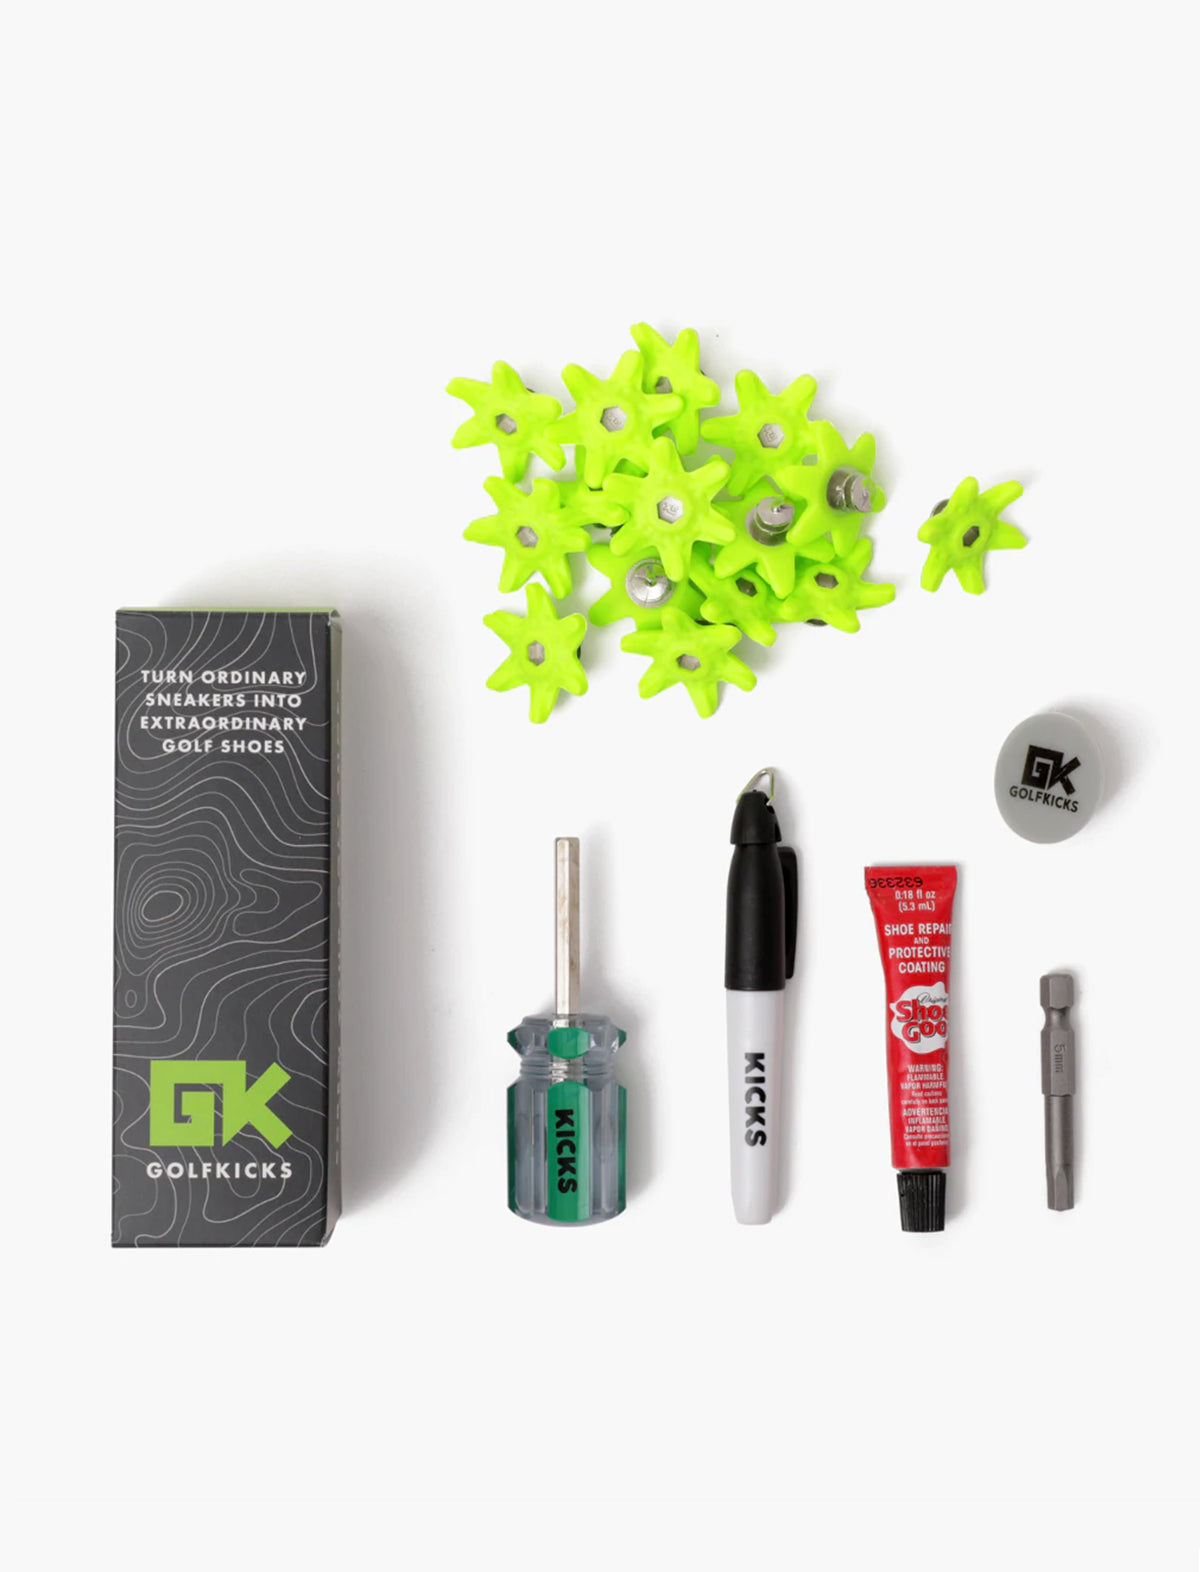 GOLFKICKS Traction Kit in Neon Green